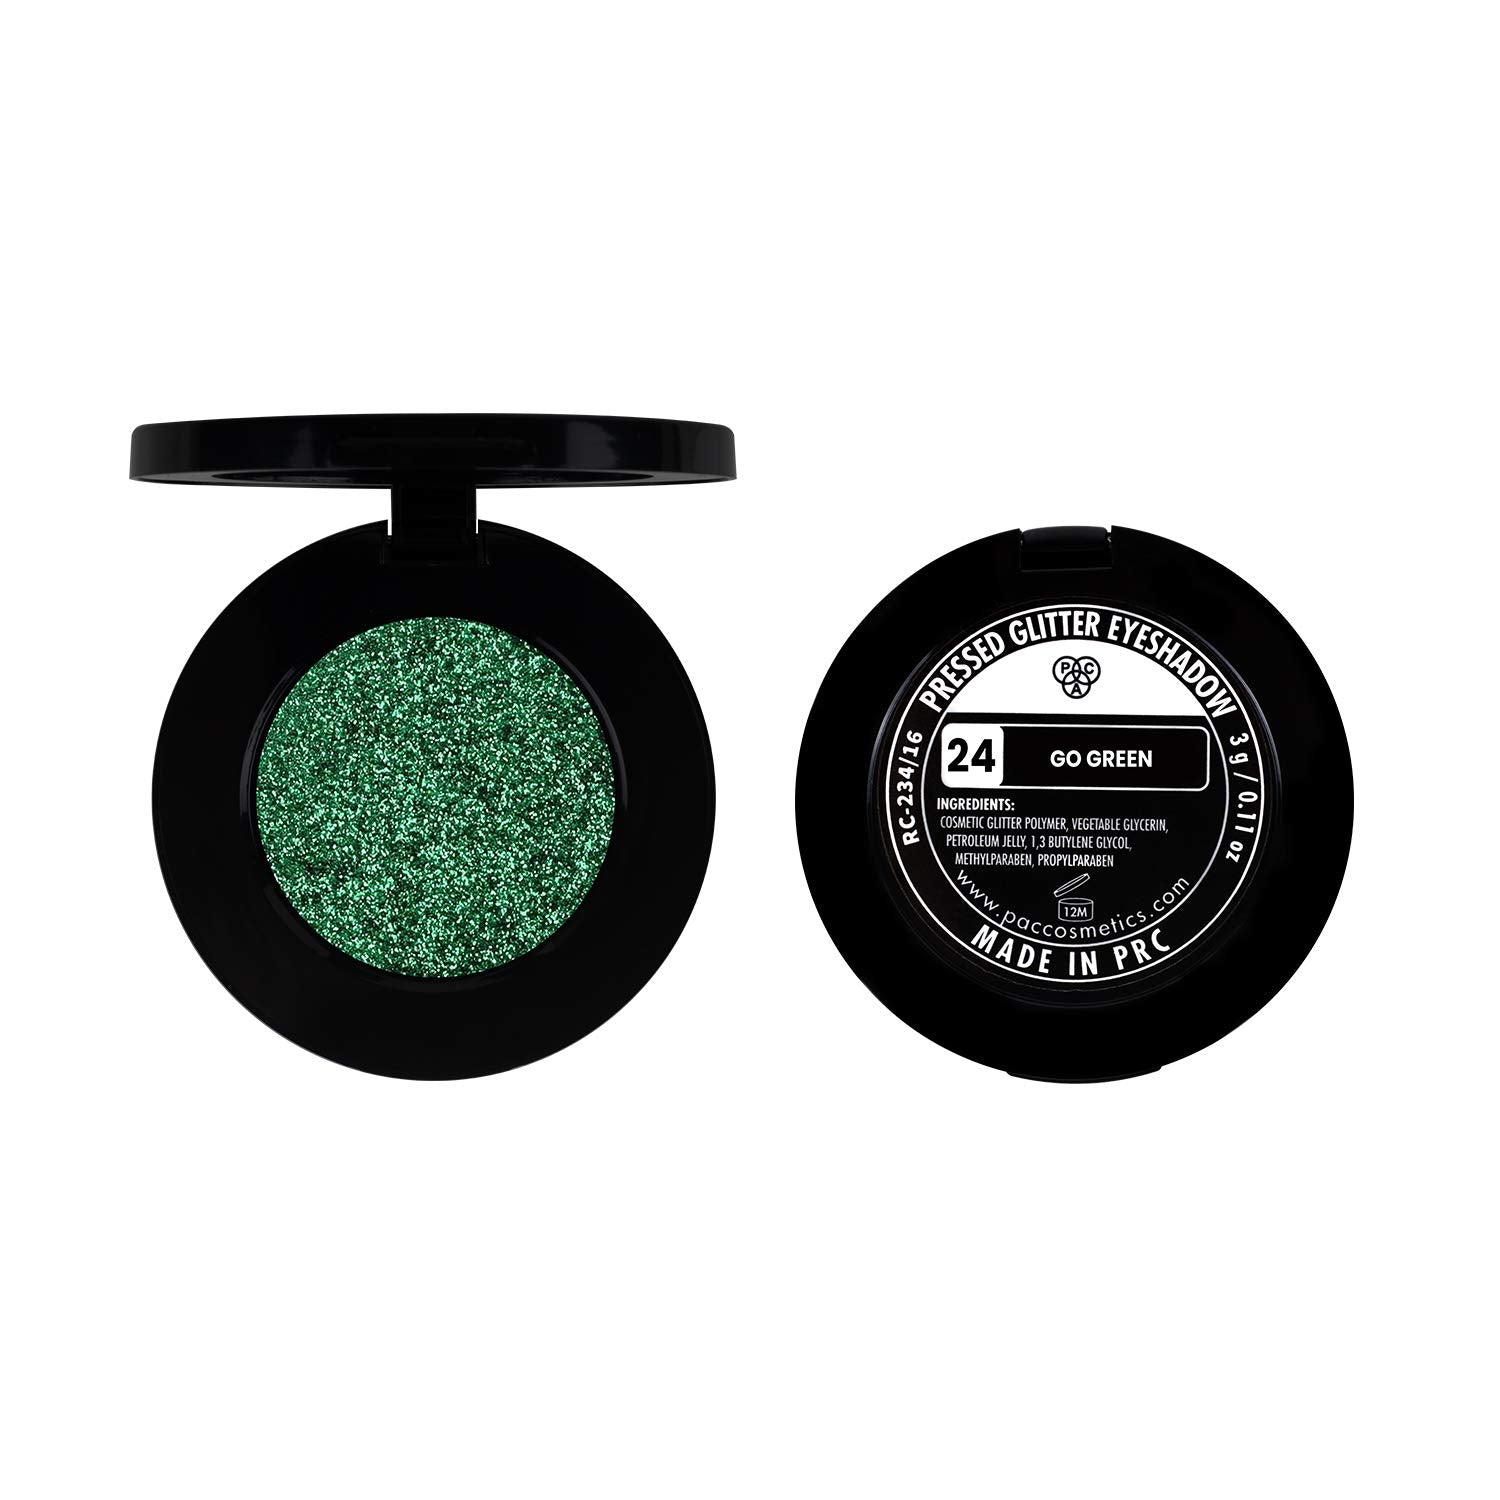 PAC Pressed Glitter Eyeshadow - 24 (Go Green) PAC